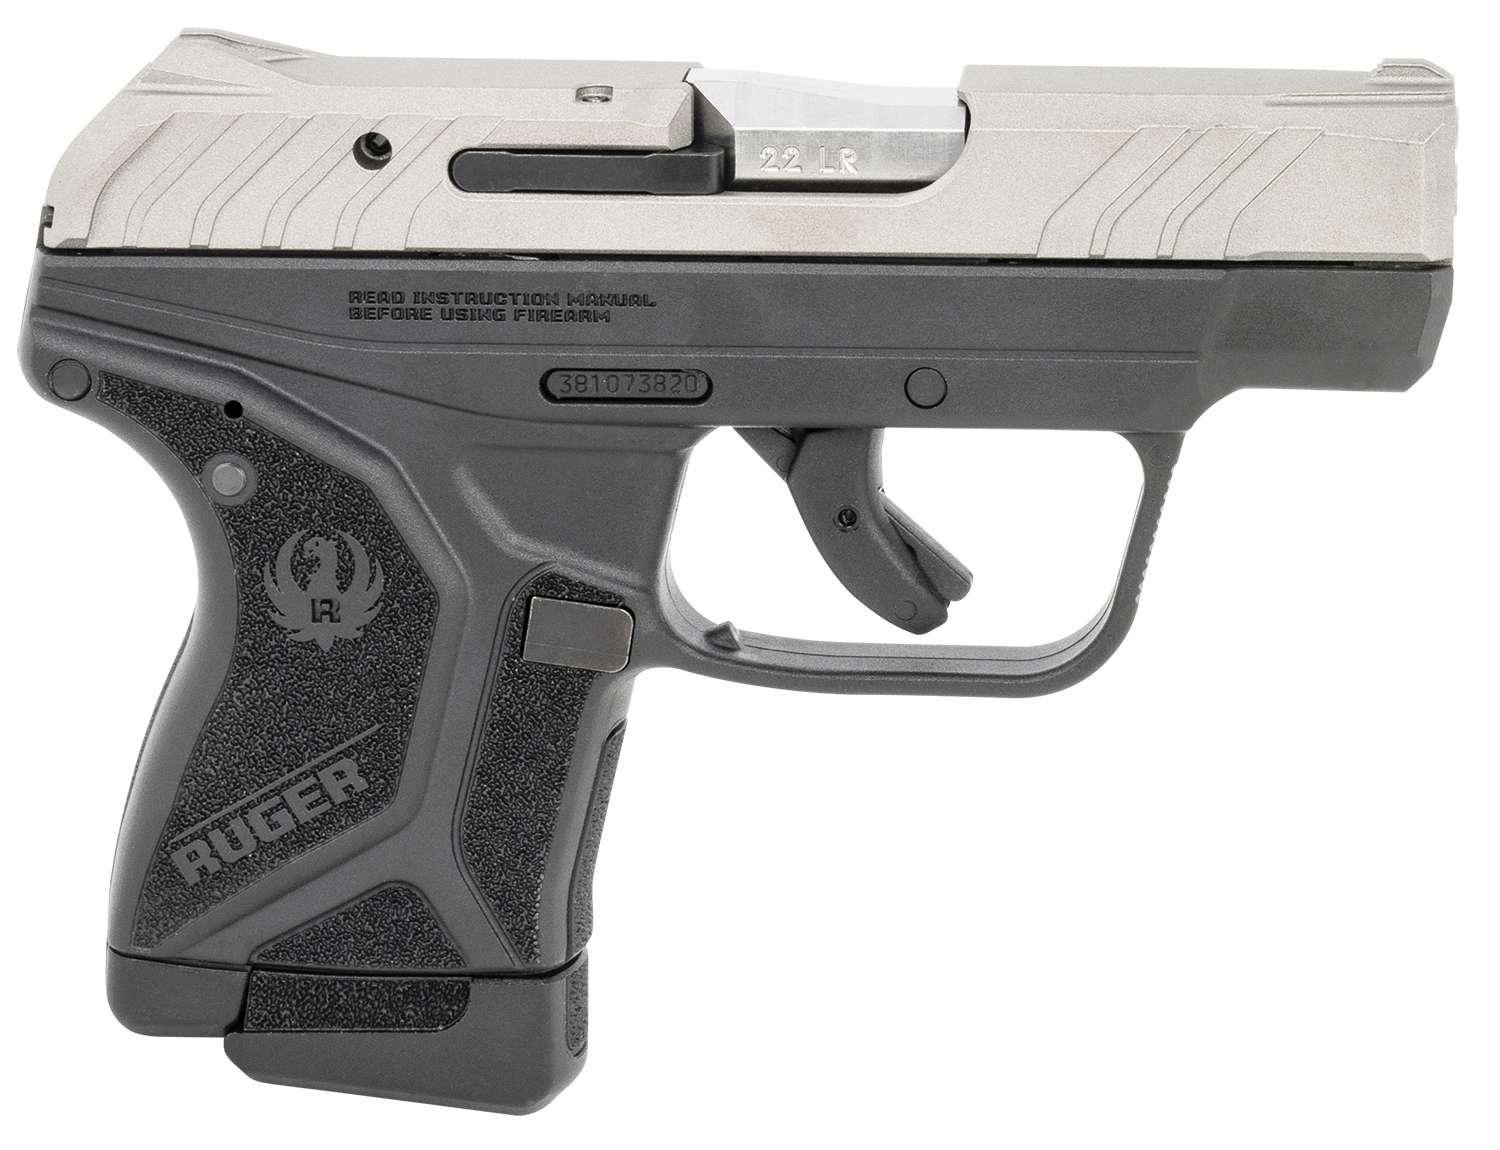 Ruger LCP II 22LR Pistol with Stainless Steel Cerakote Slide - $261.20 